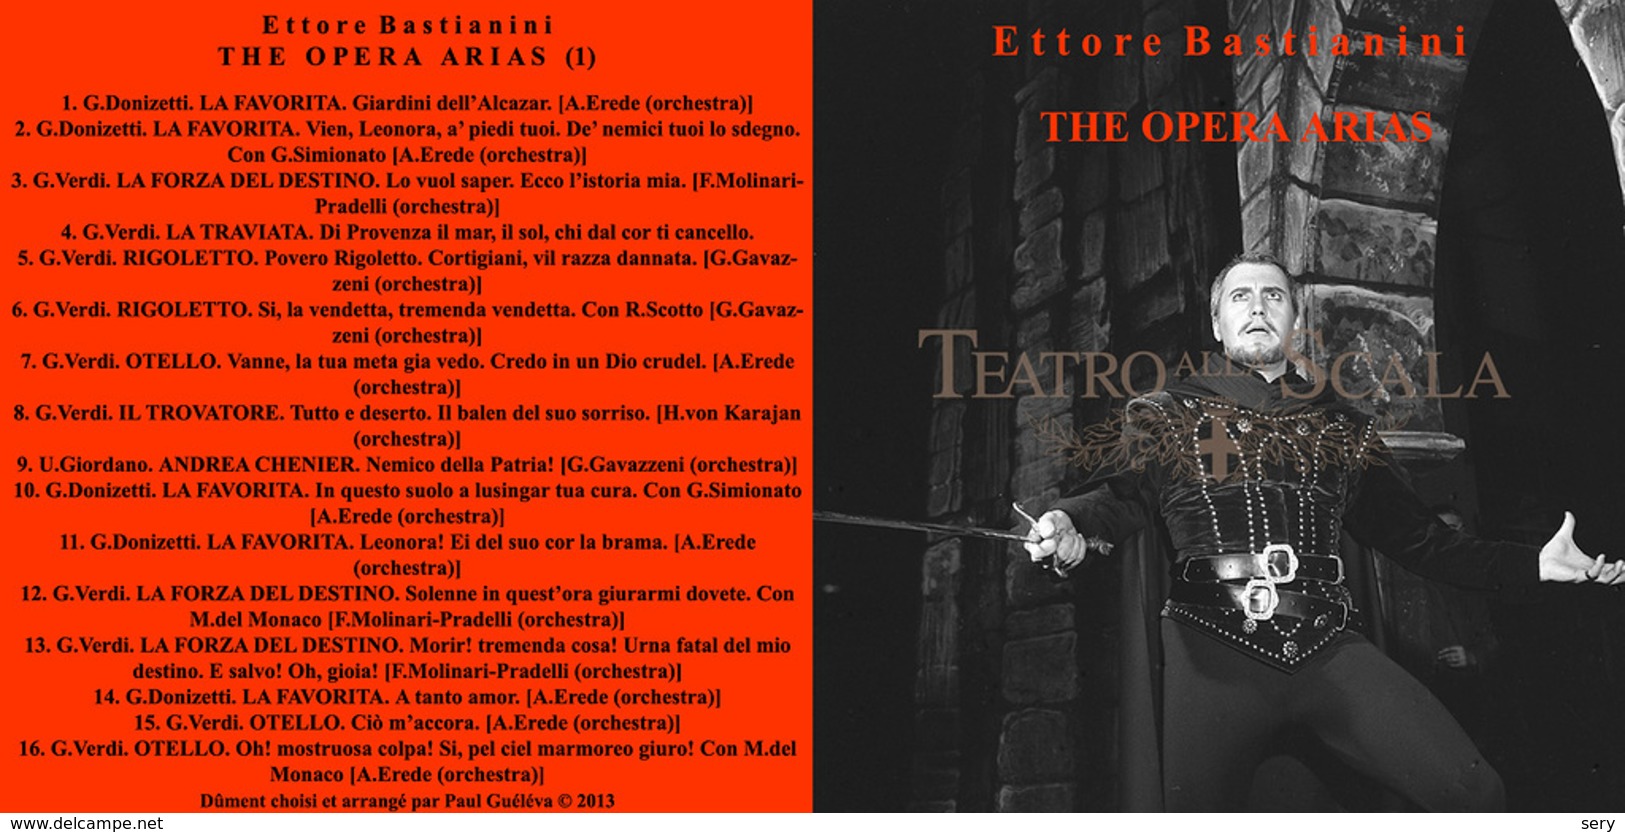 Superlimited Edition CD Ettore Bastianin. THE OPERA ARIAS I - Opera